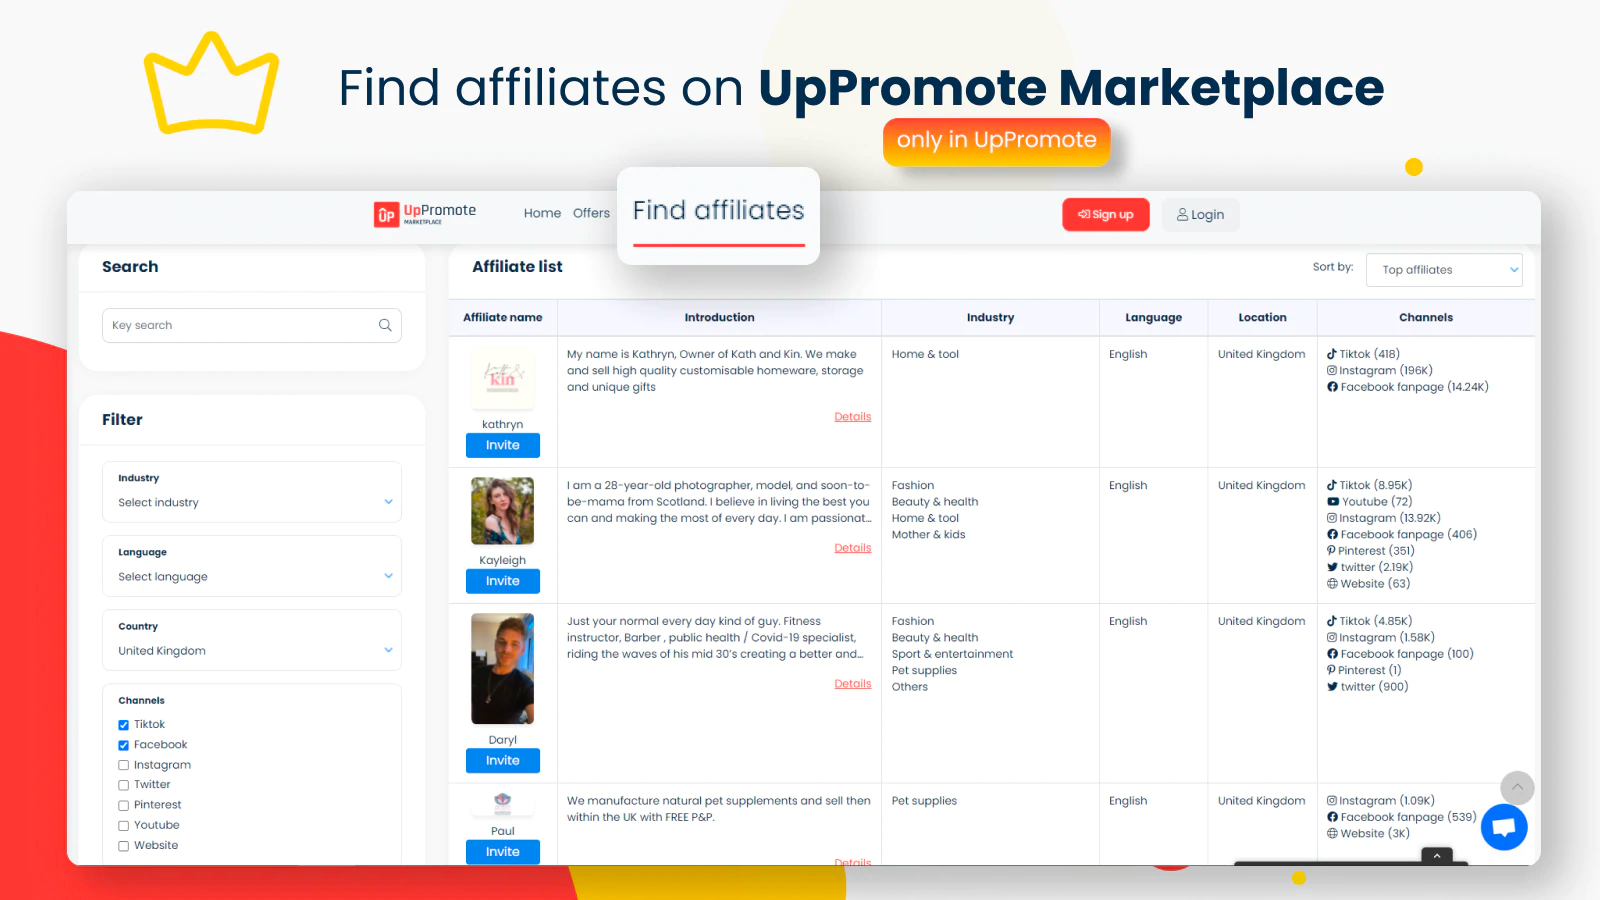 UpPromote's affiliate marketplace